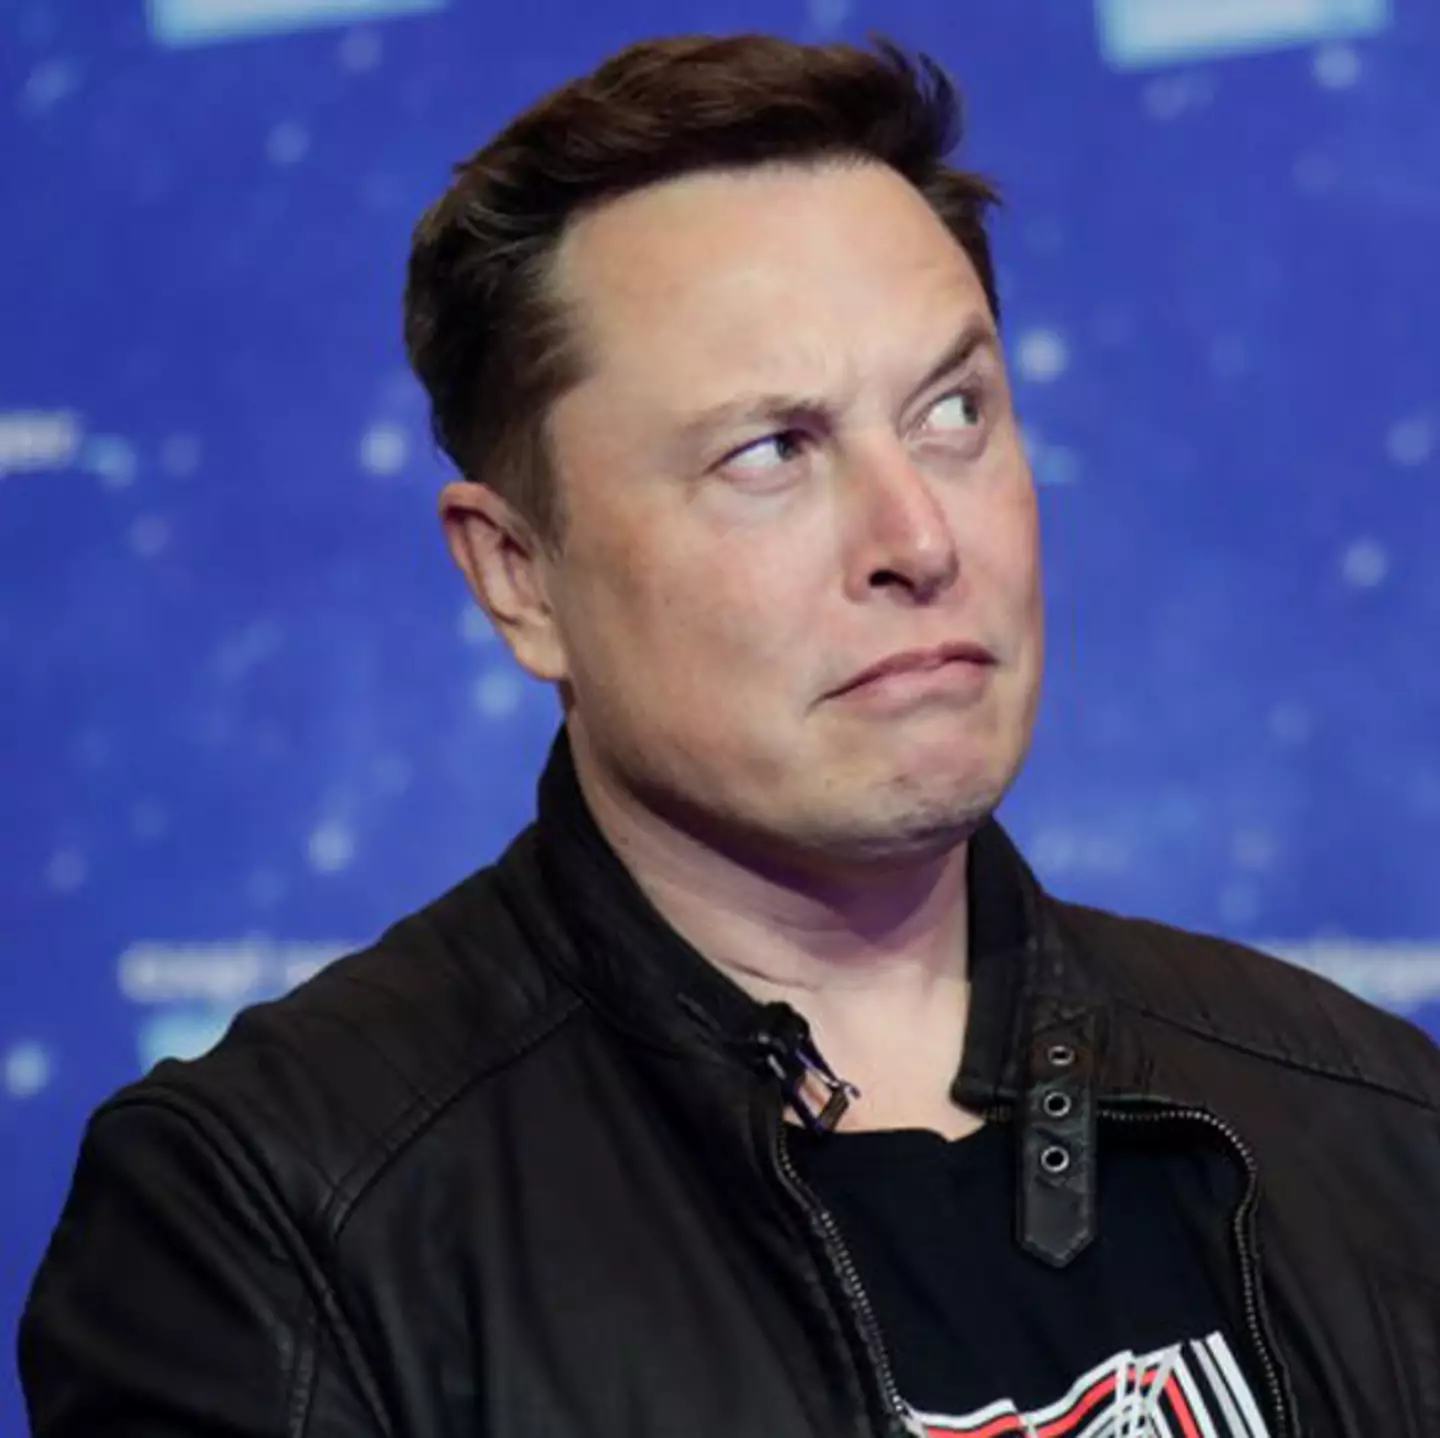 Reason why CEOs rarely respond to Elon Musk’s criticisms